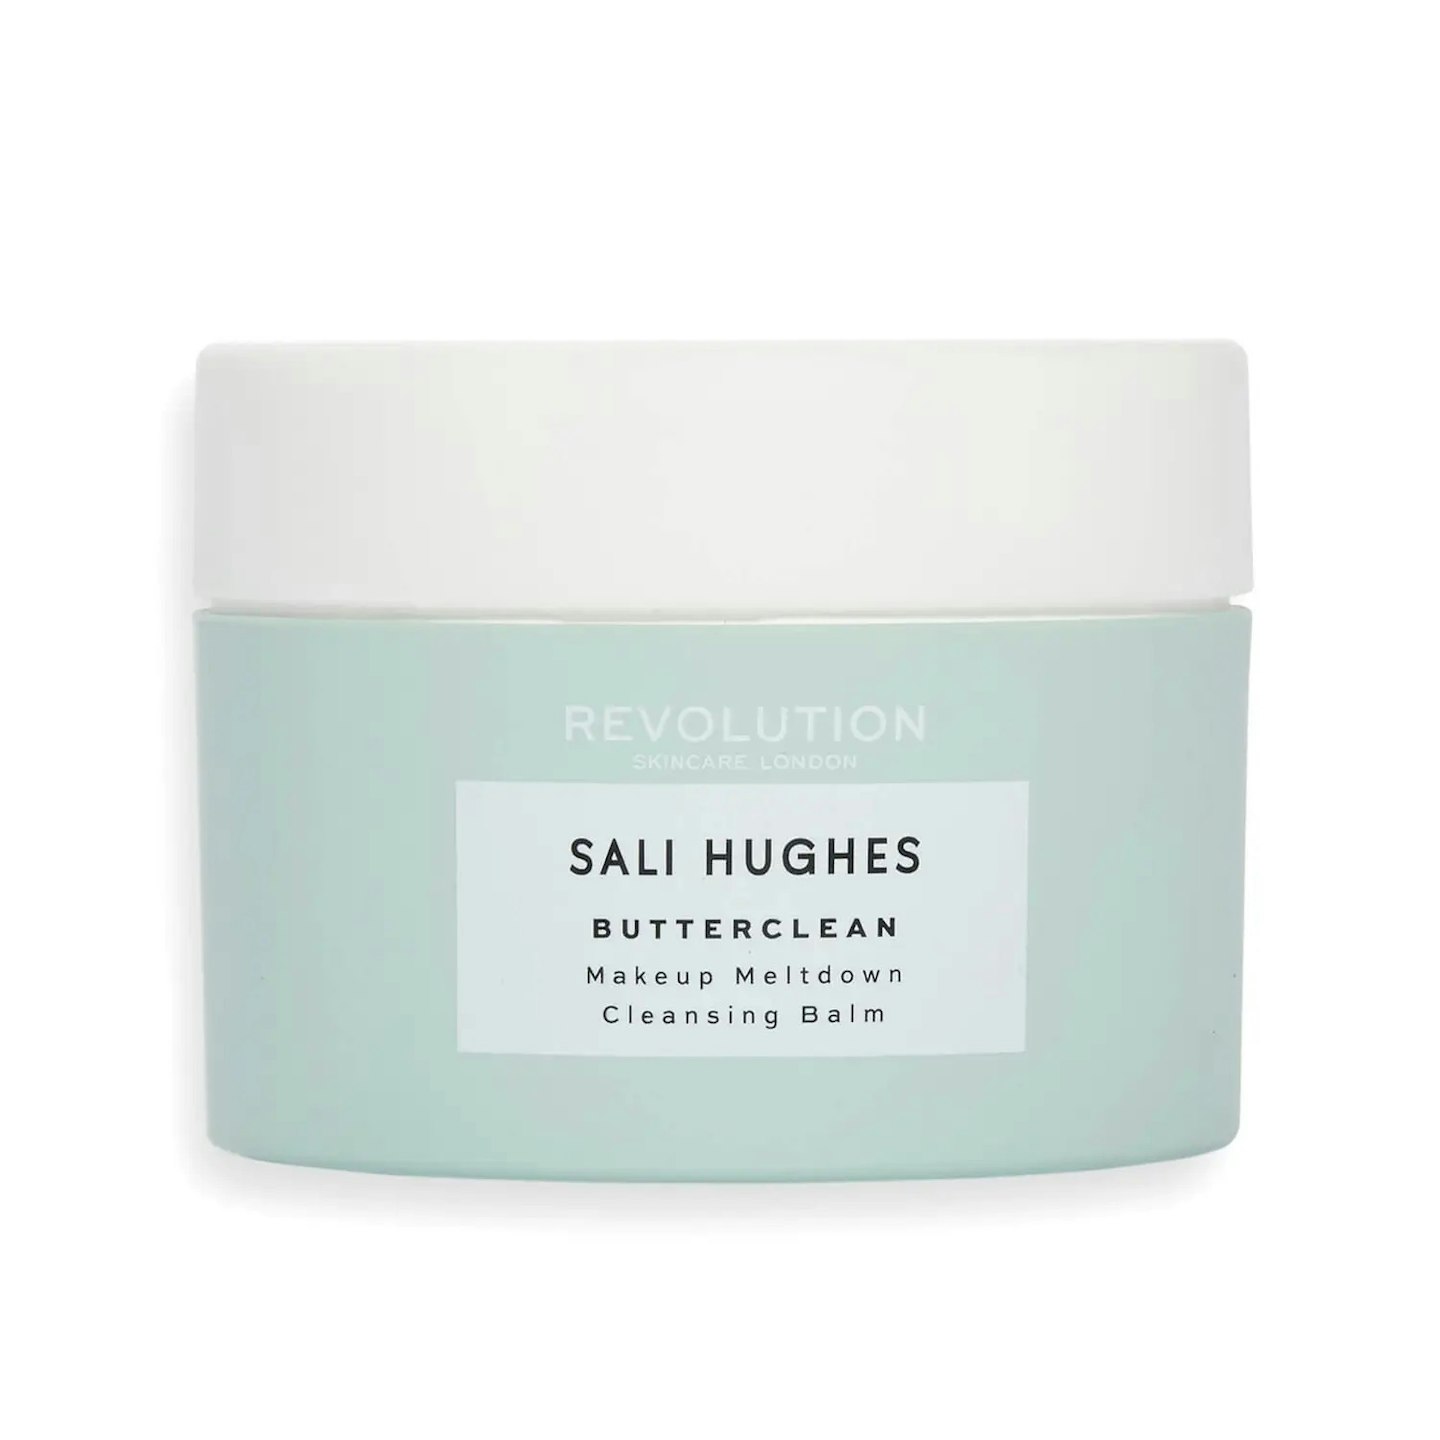 Sali Hughes x Revolution Skincare Butterclean Makeup Meltdown Cleansing Balm